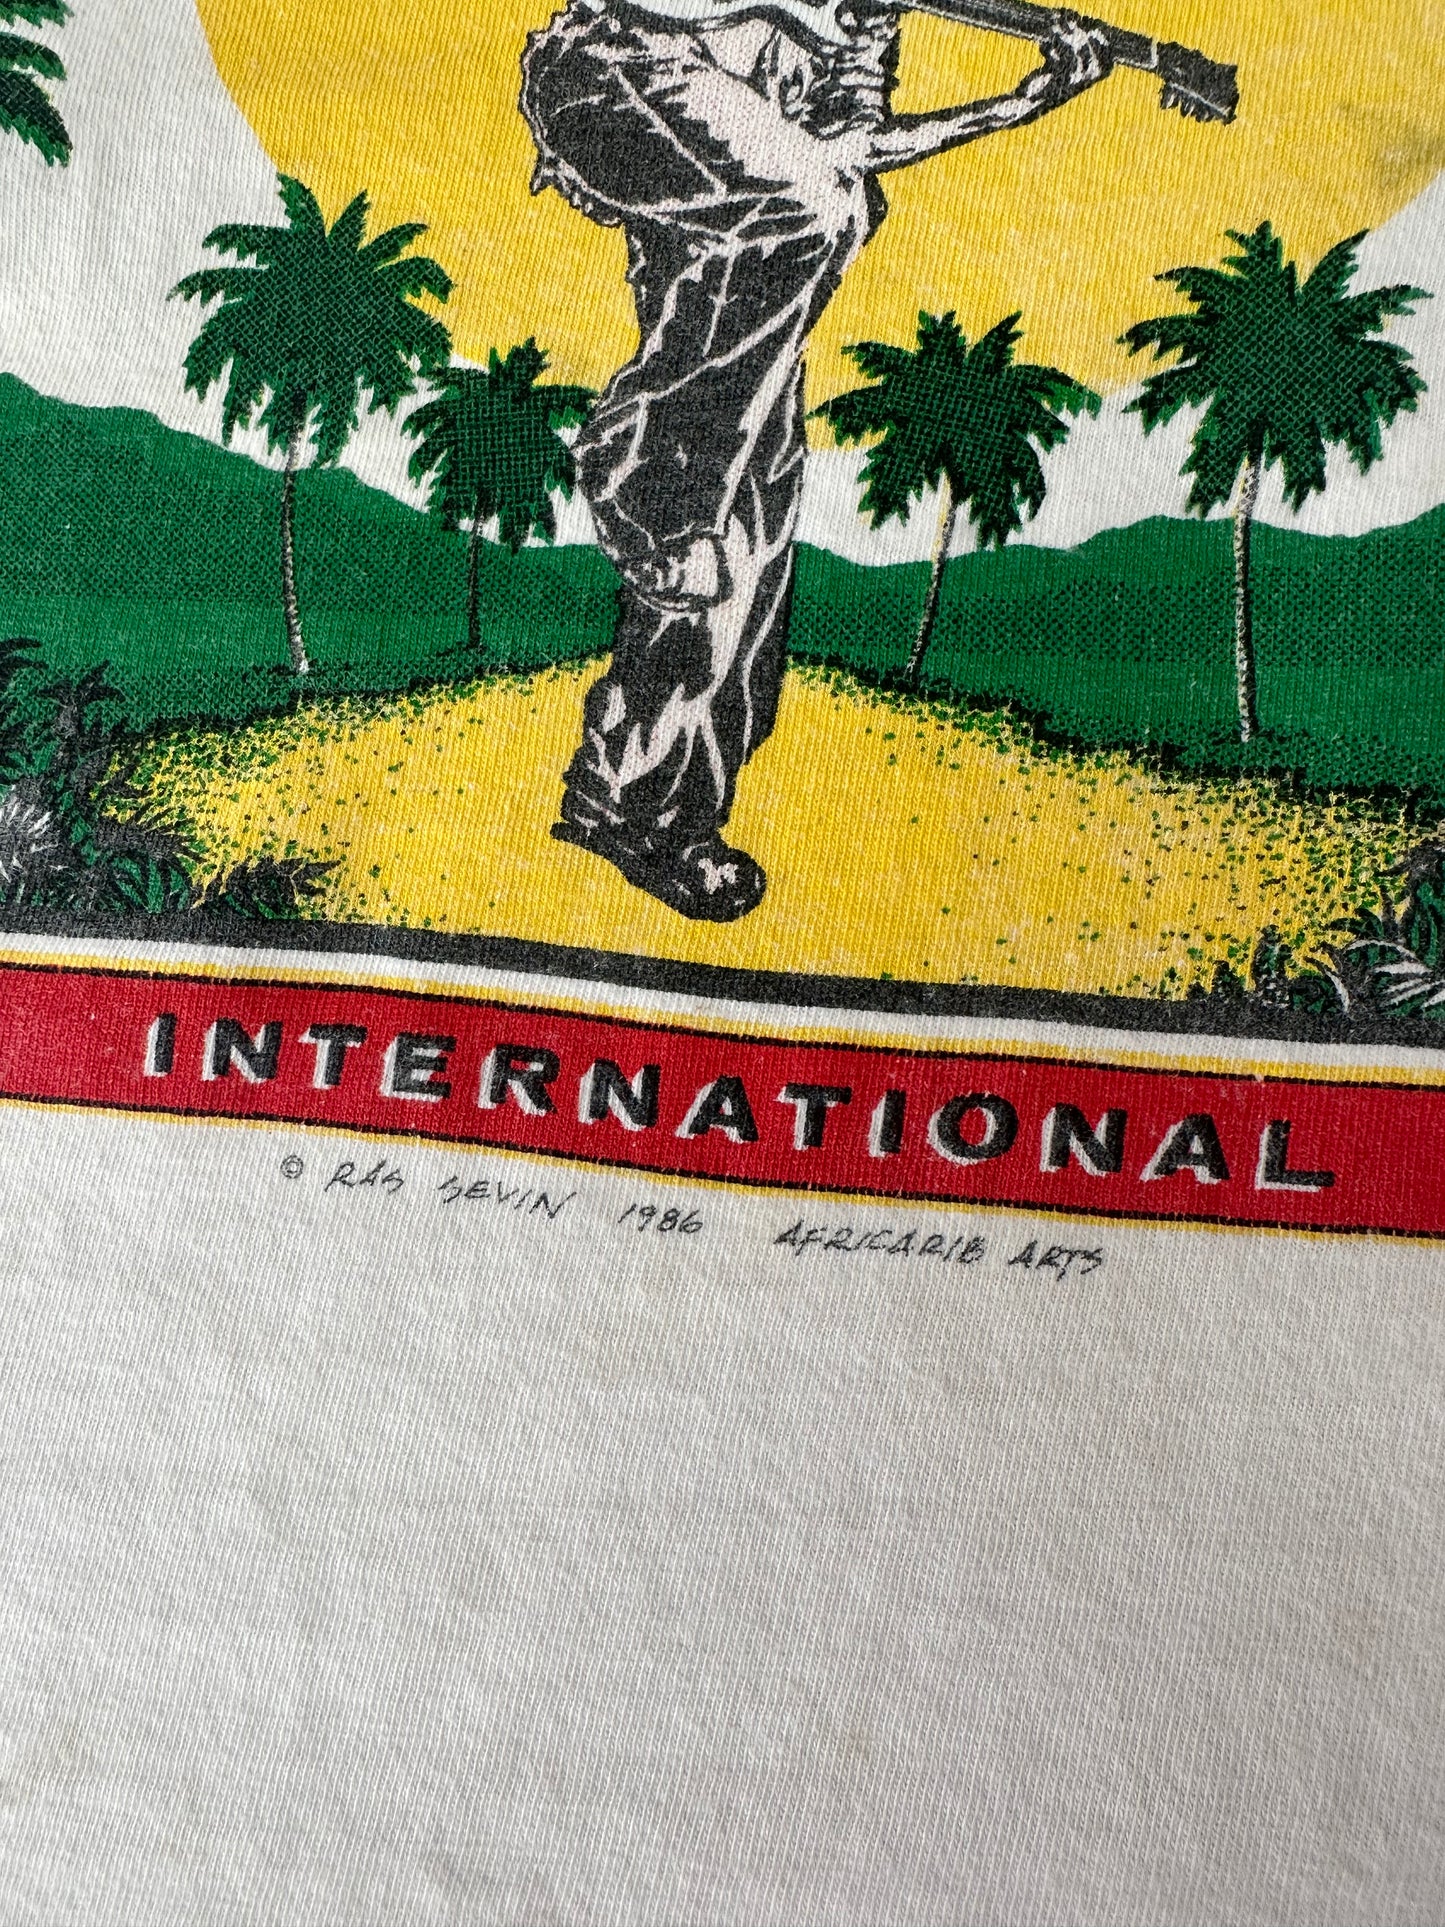 1986 Club Reggae International T-Shirt